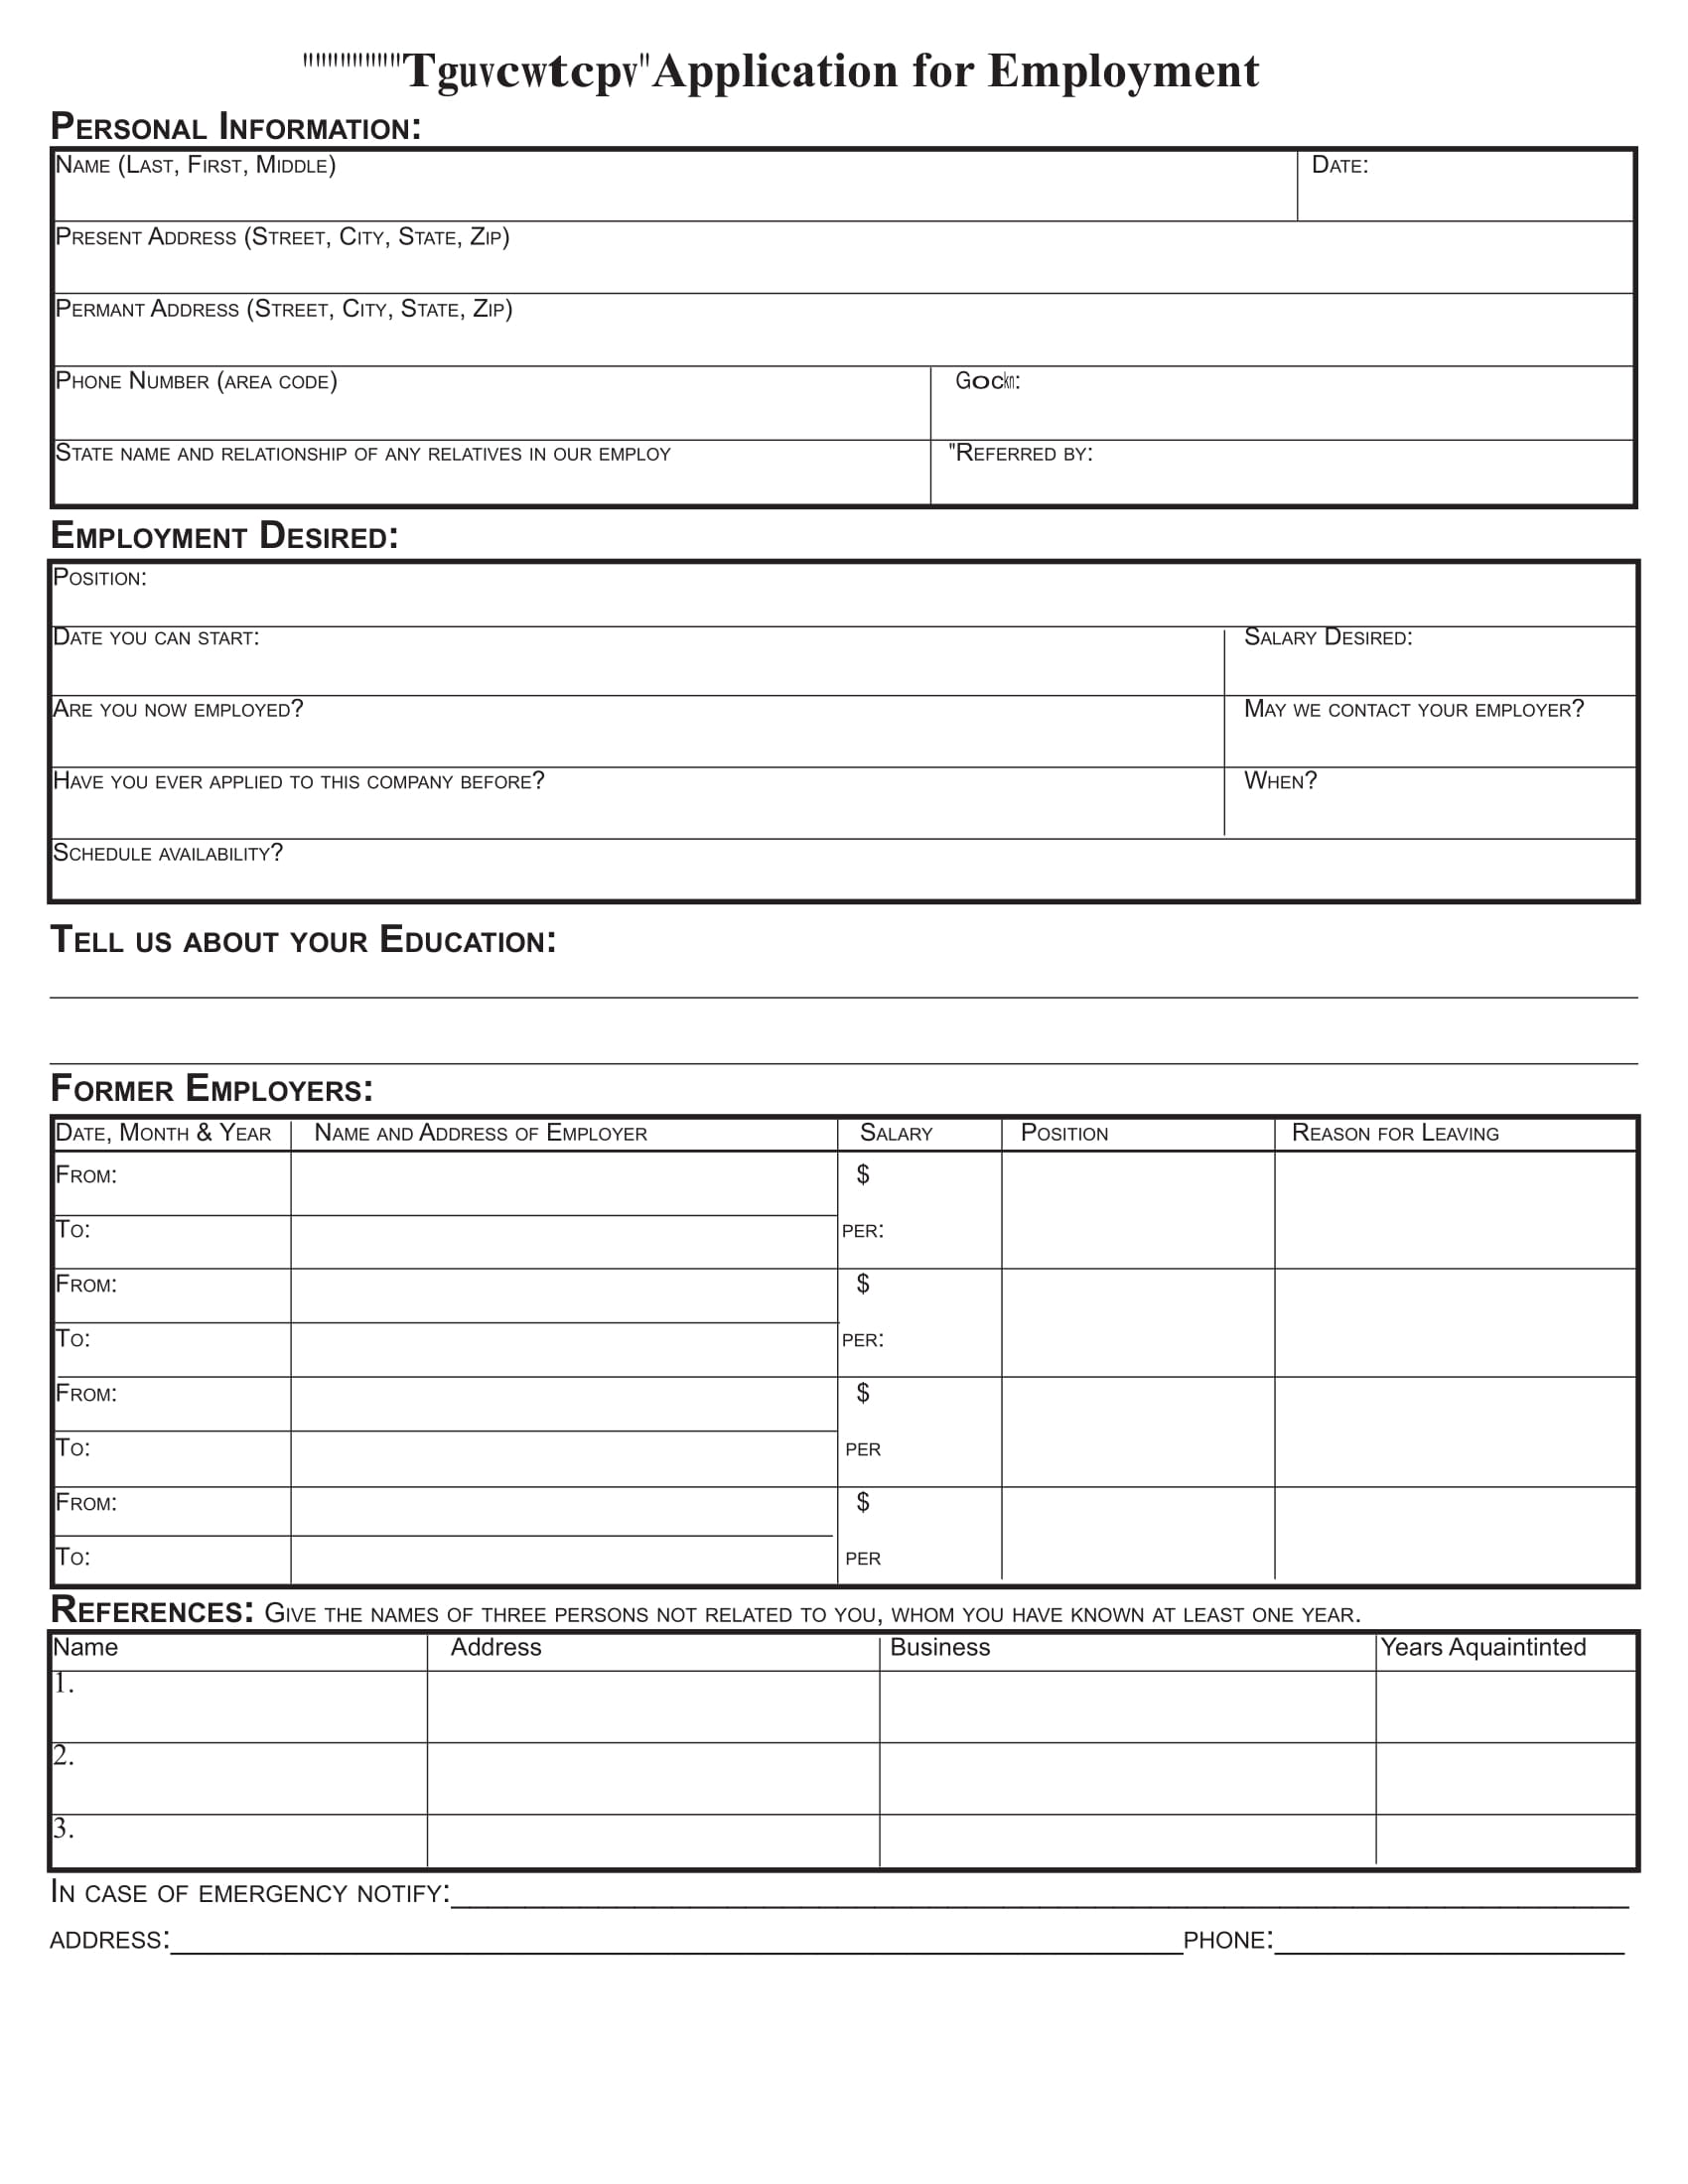 restaurant application for employment form 1